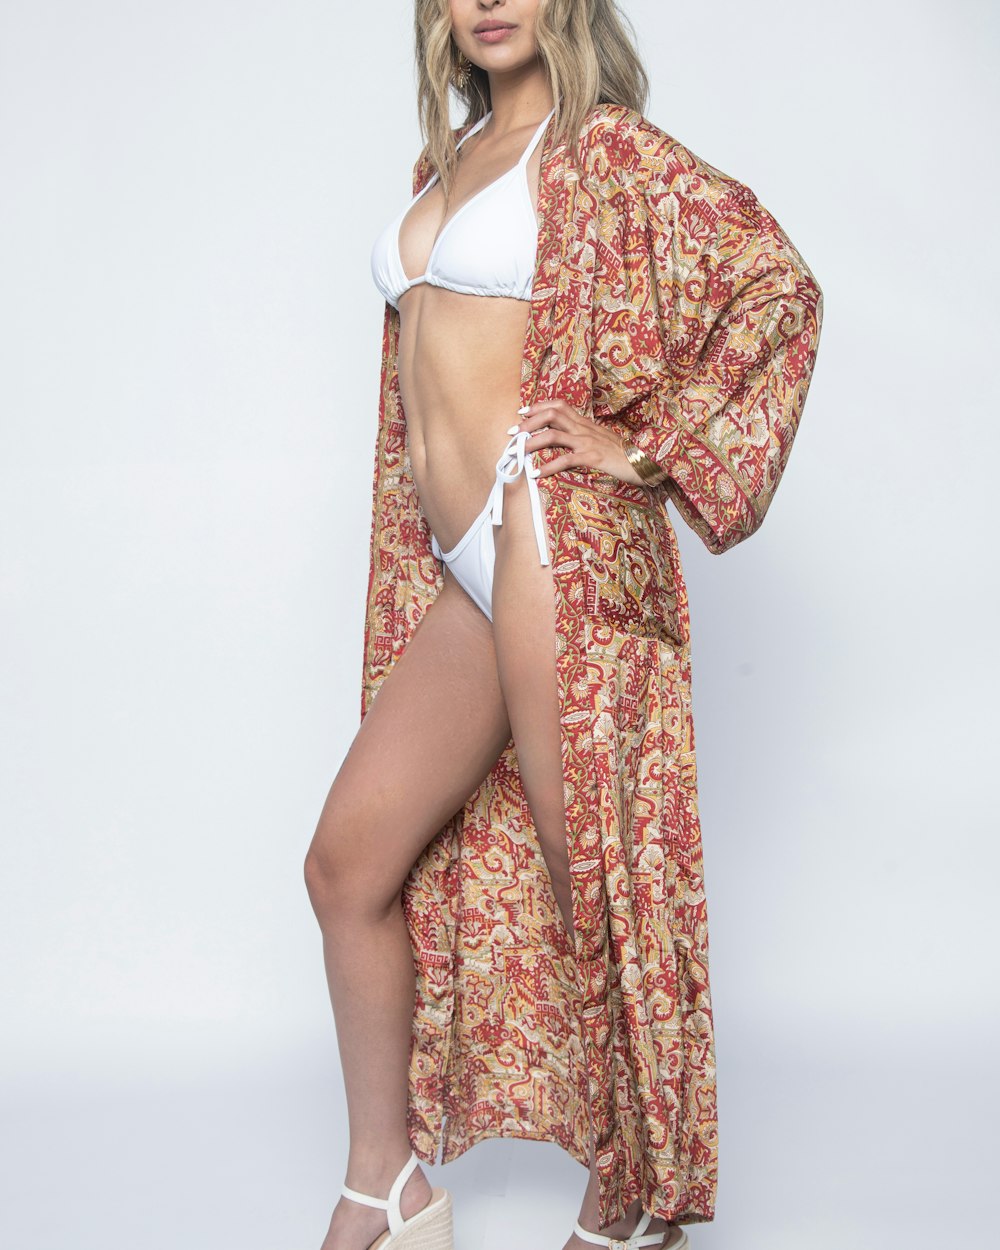 une femme en bikini et kimono